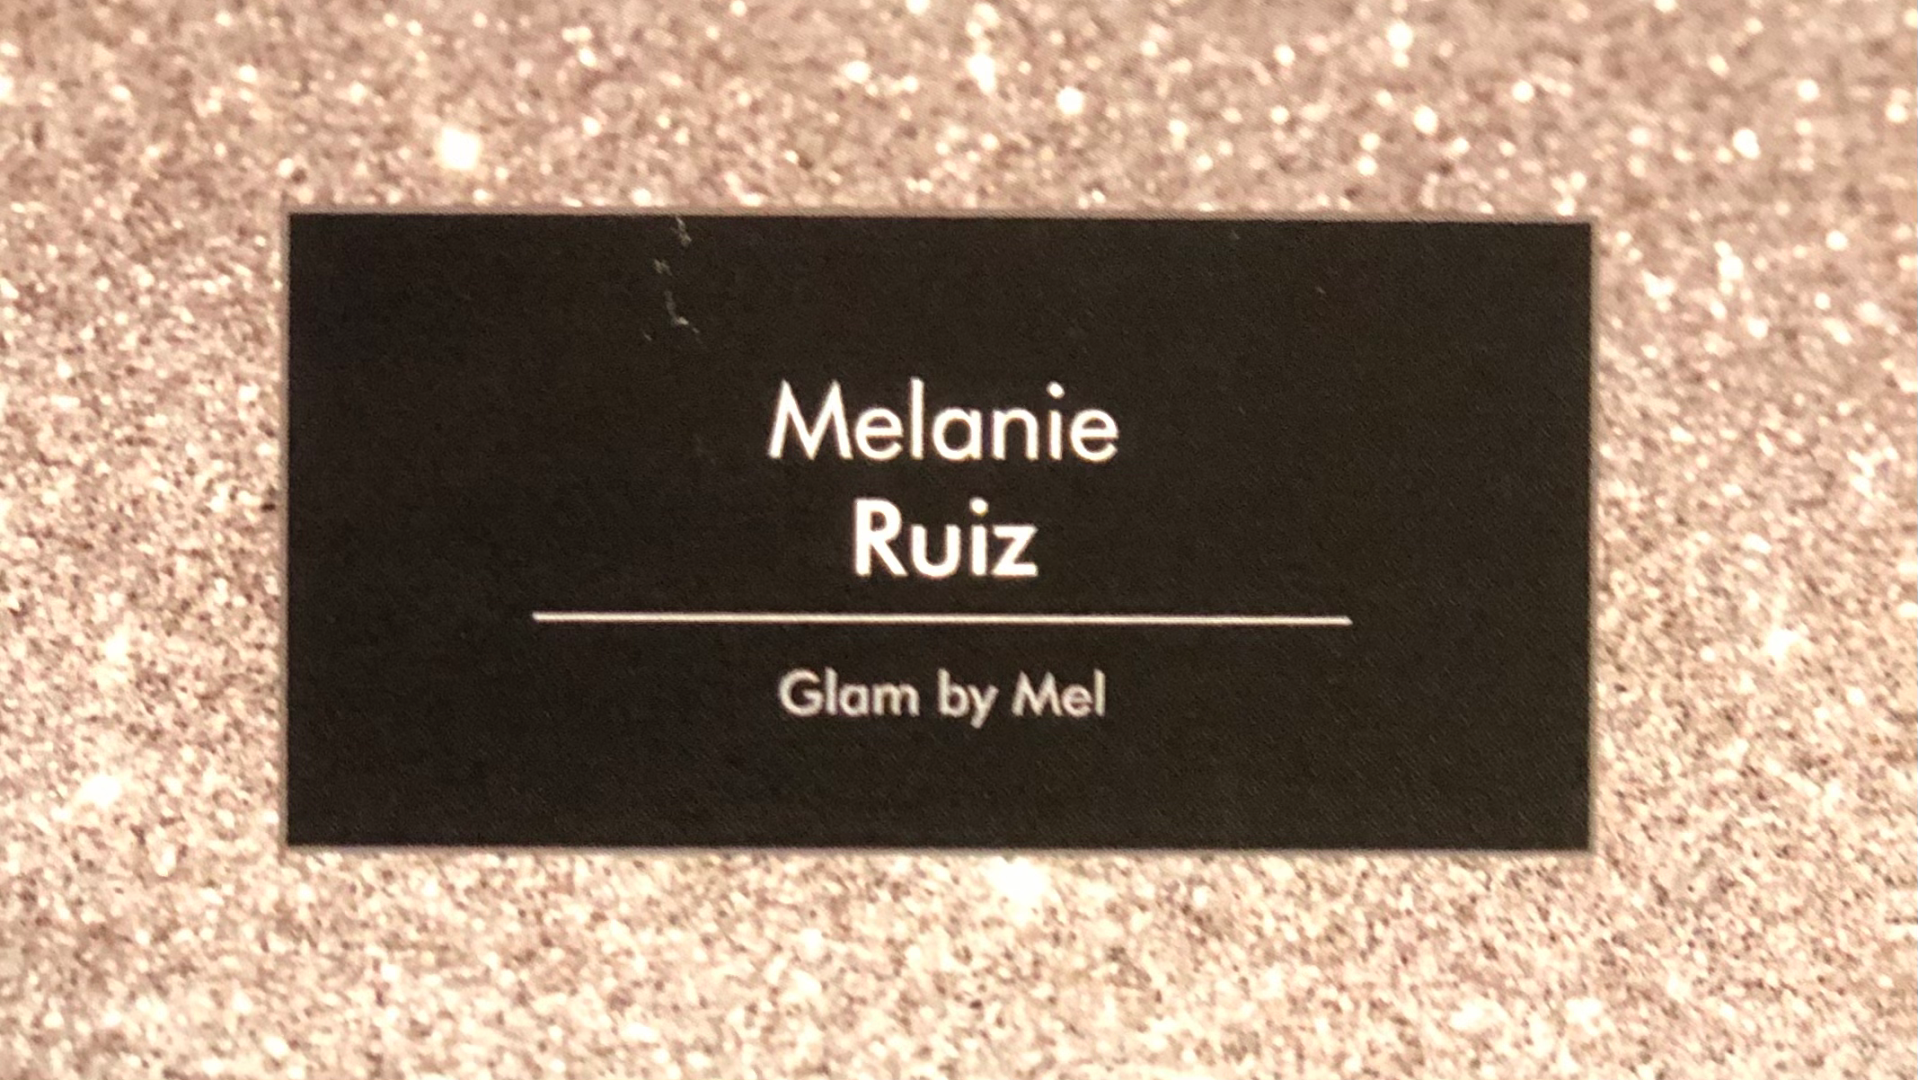 Glam by Mel